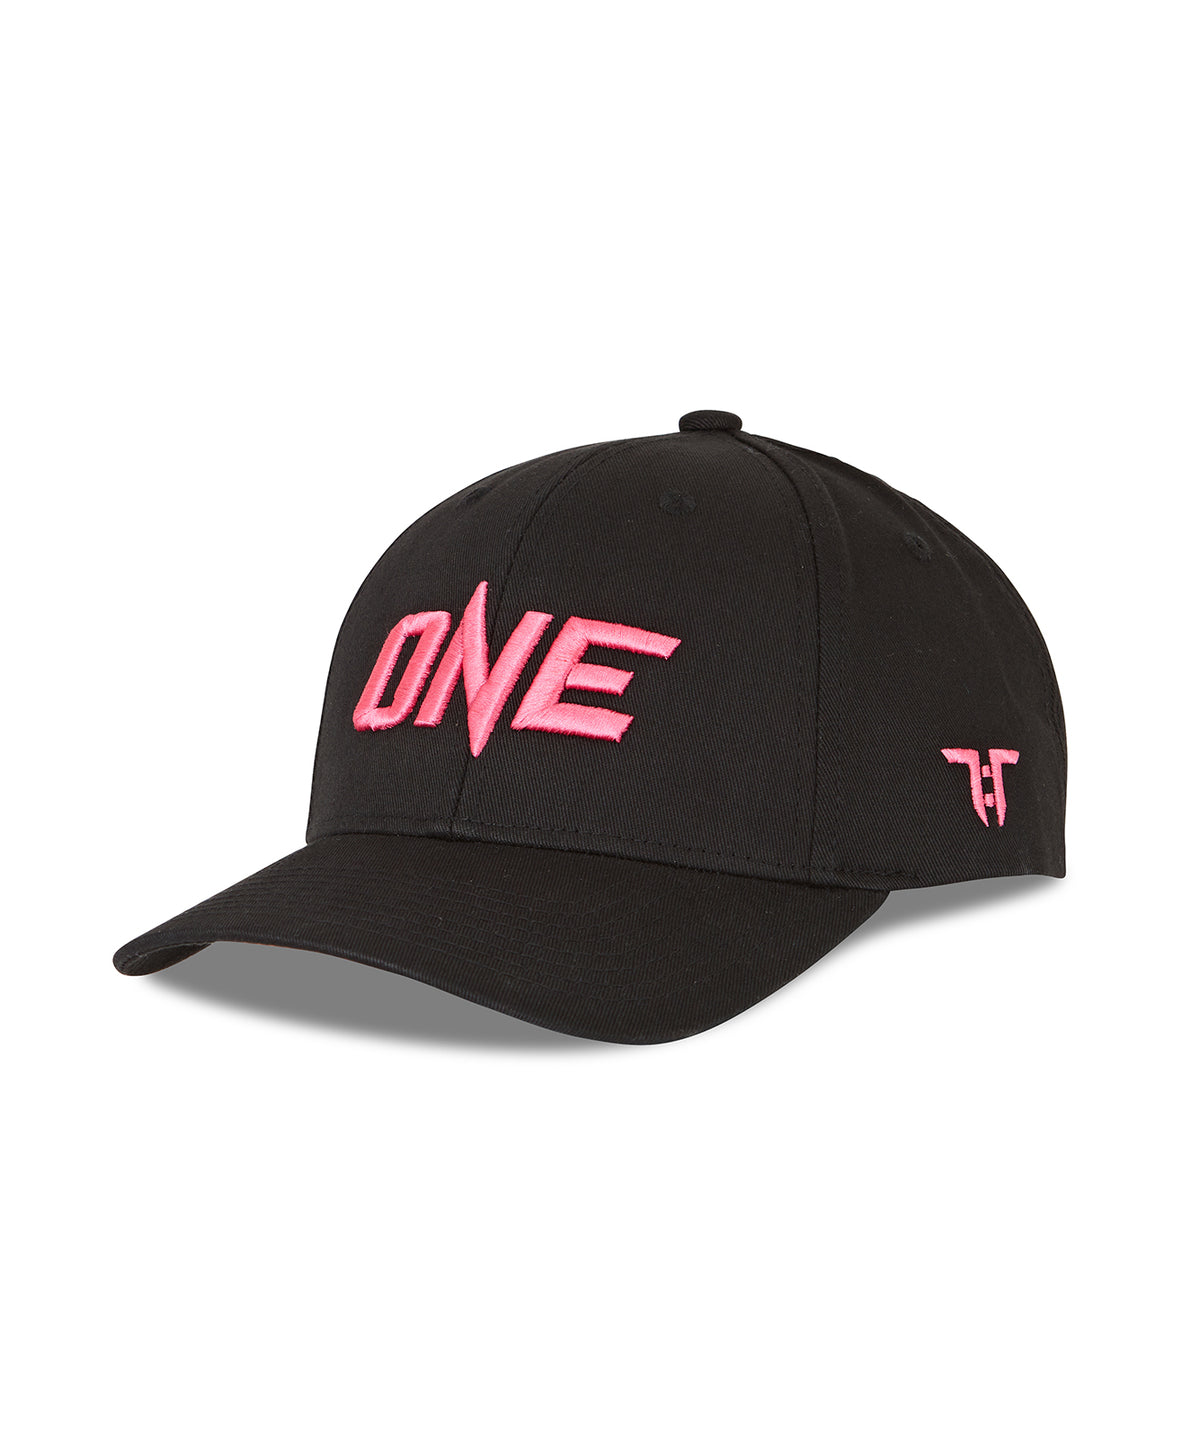 ONE x Tokyo Time BL Collab Cap (Black/Pink)